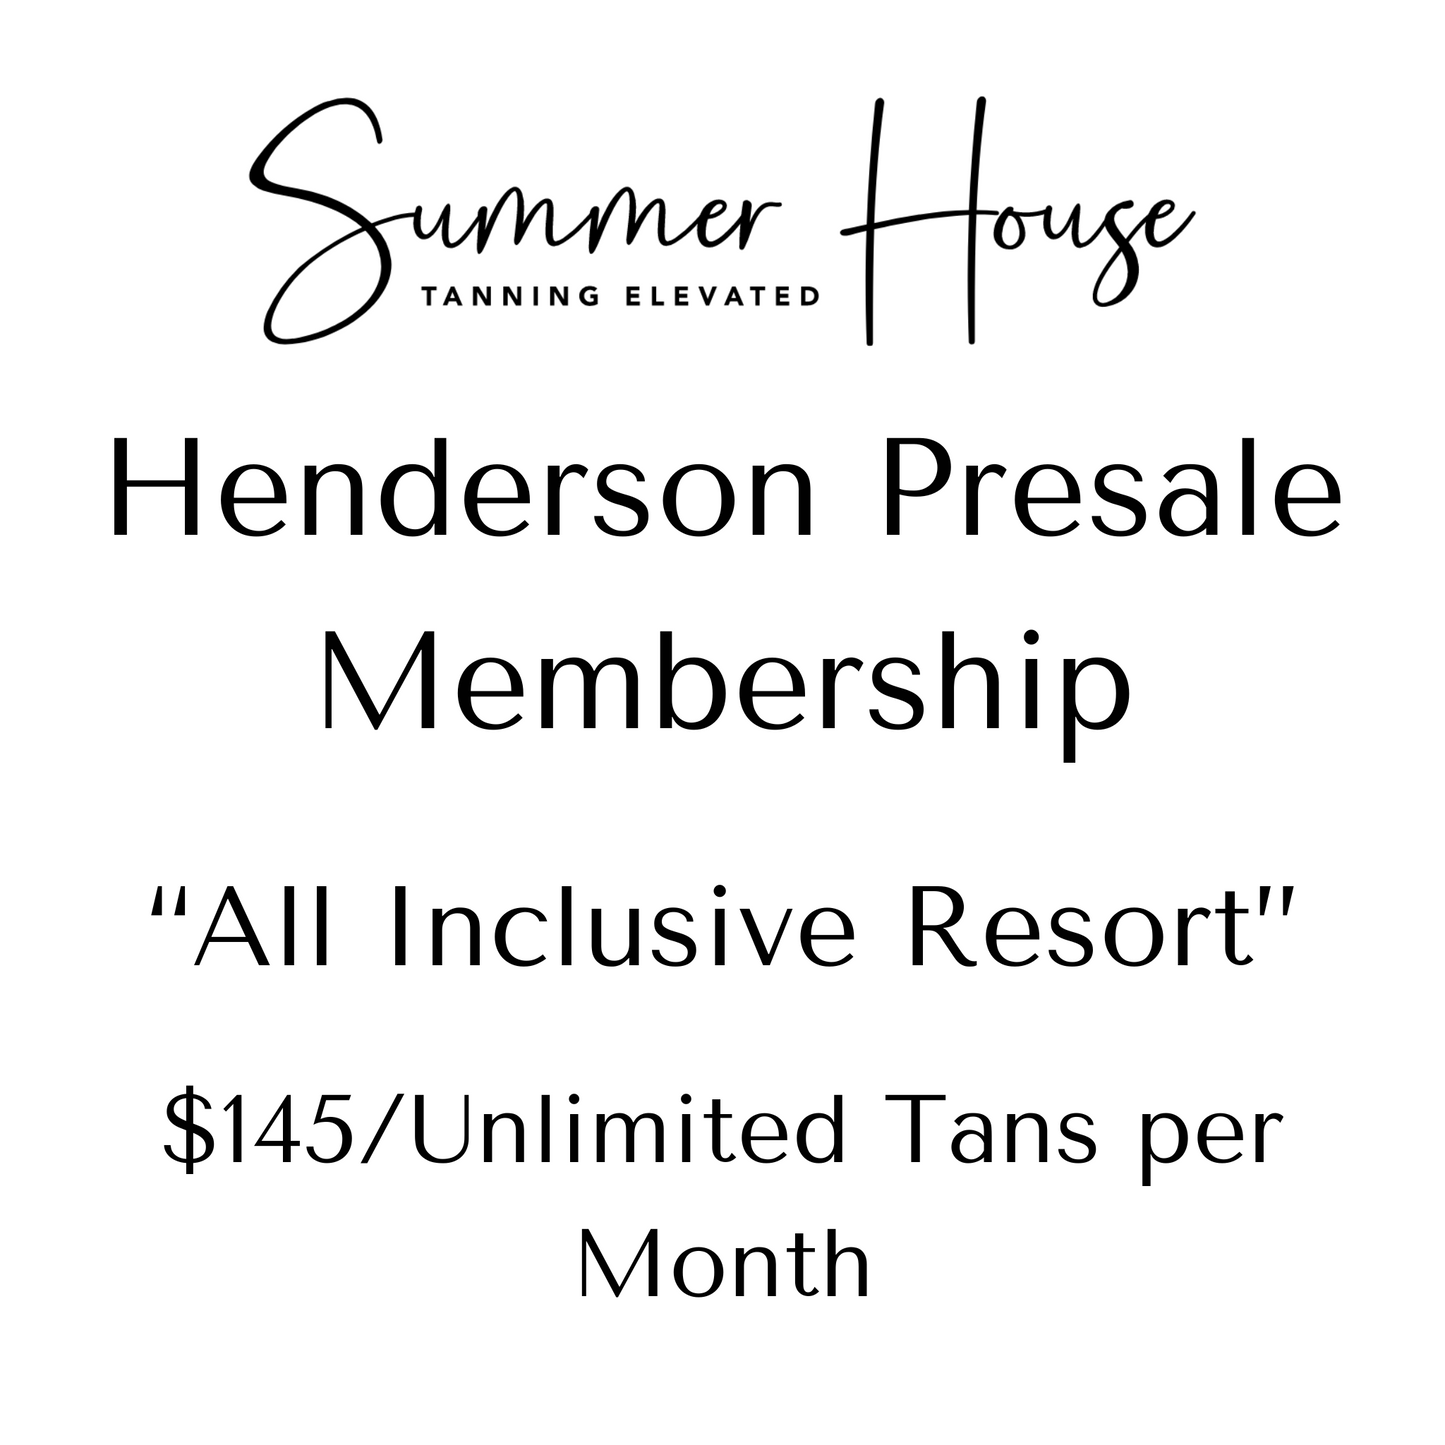 *Pre-Sale Membership $145/month - Unlimited